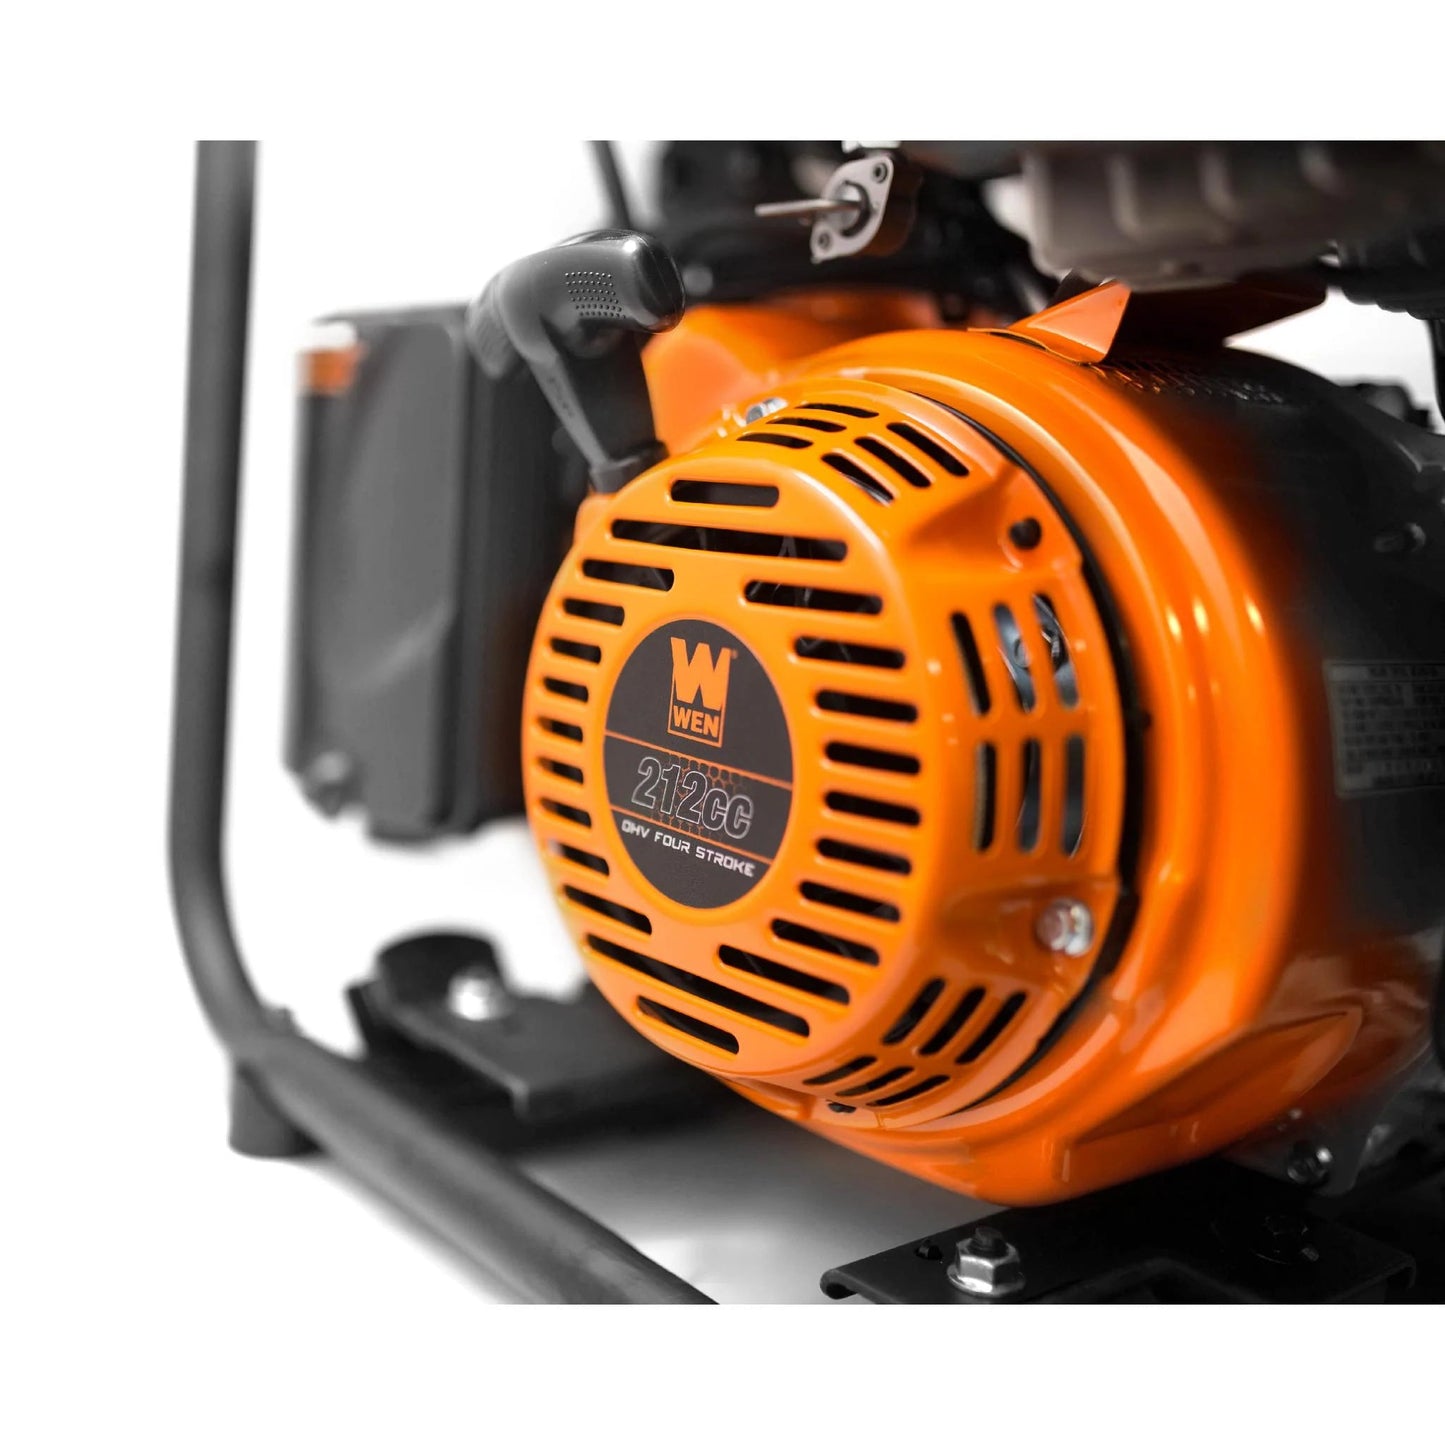 Motor del generador produce 212cc OHV Four Stroke.